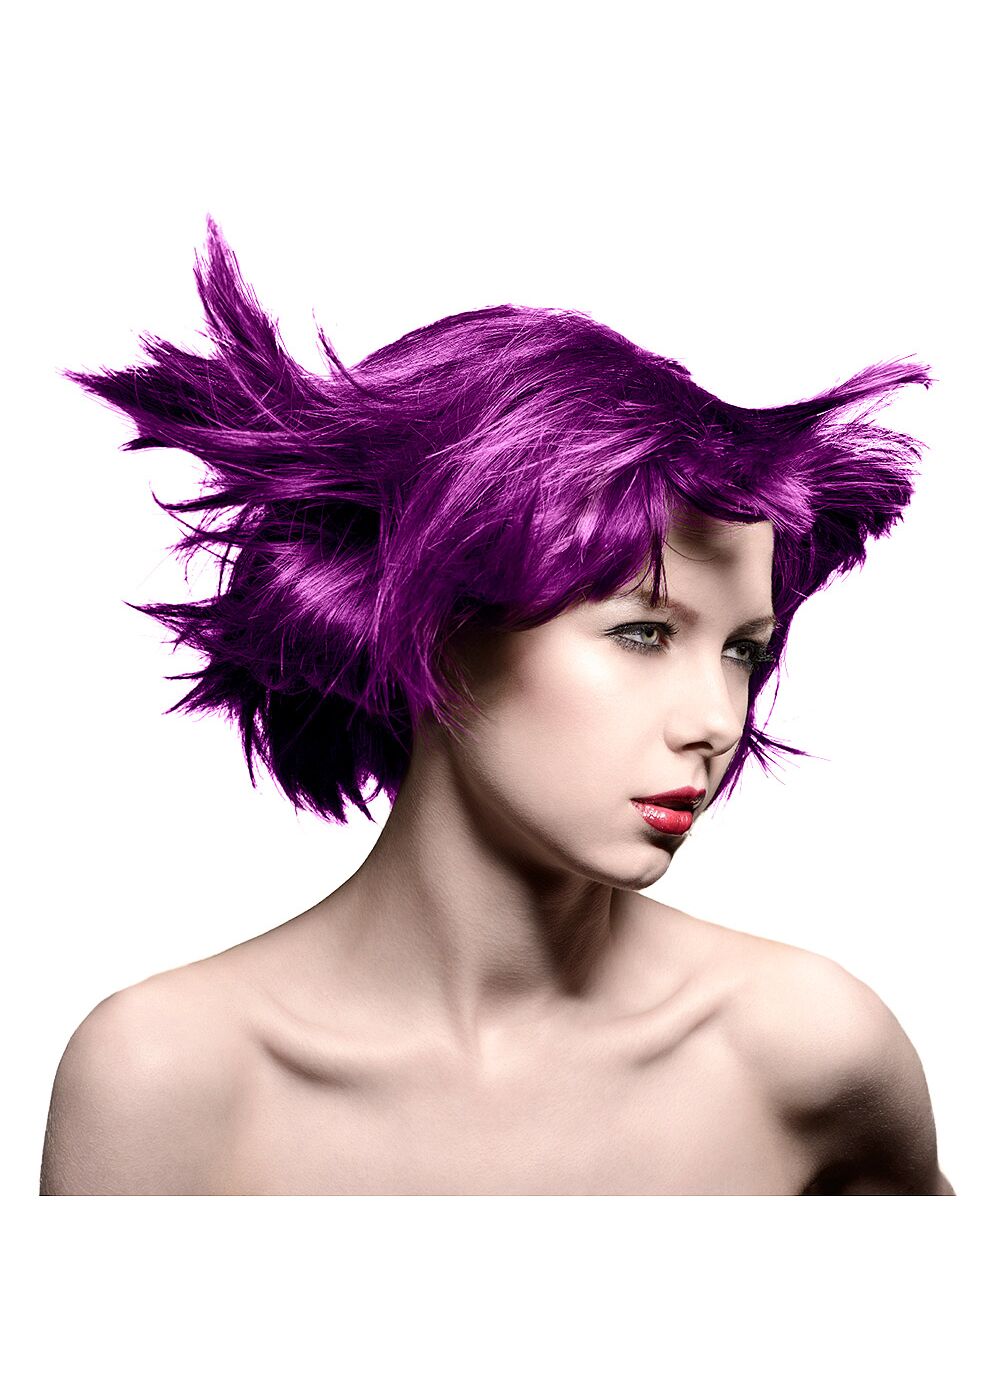 Manic Panic Classic Cream Hair Colour - Purple Haze - Kate's Clothing